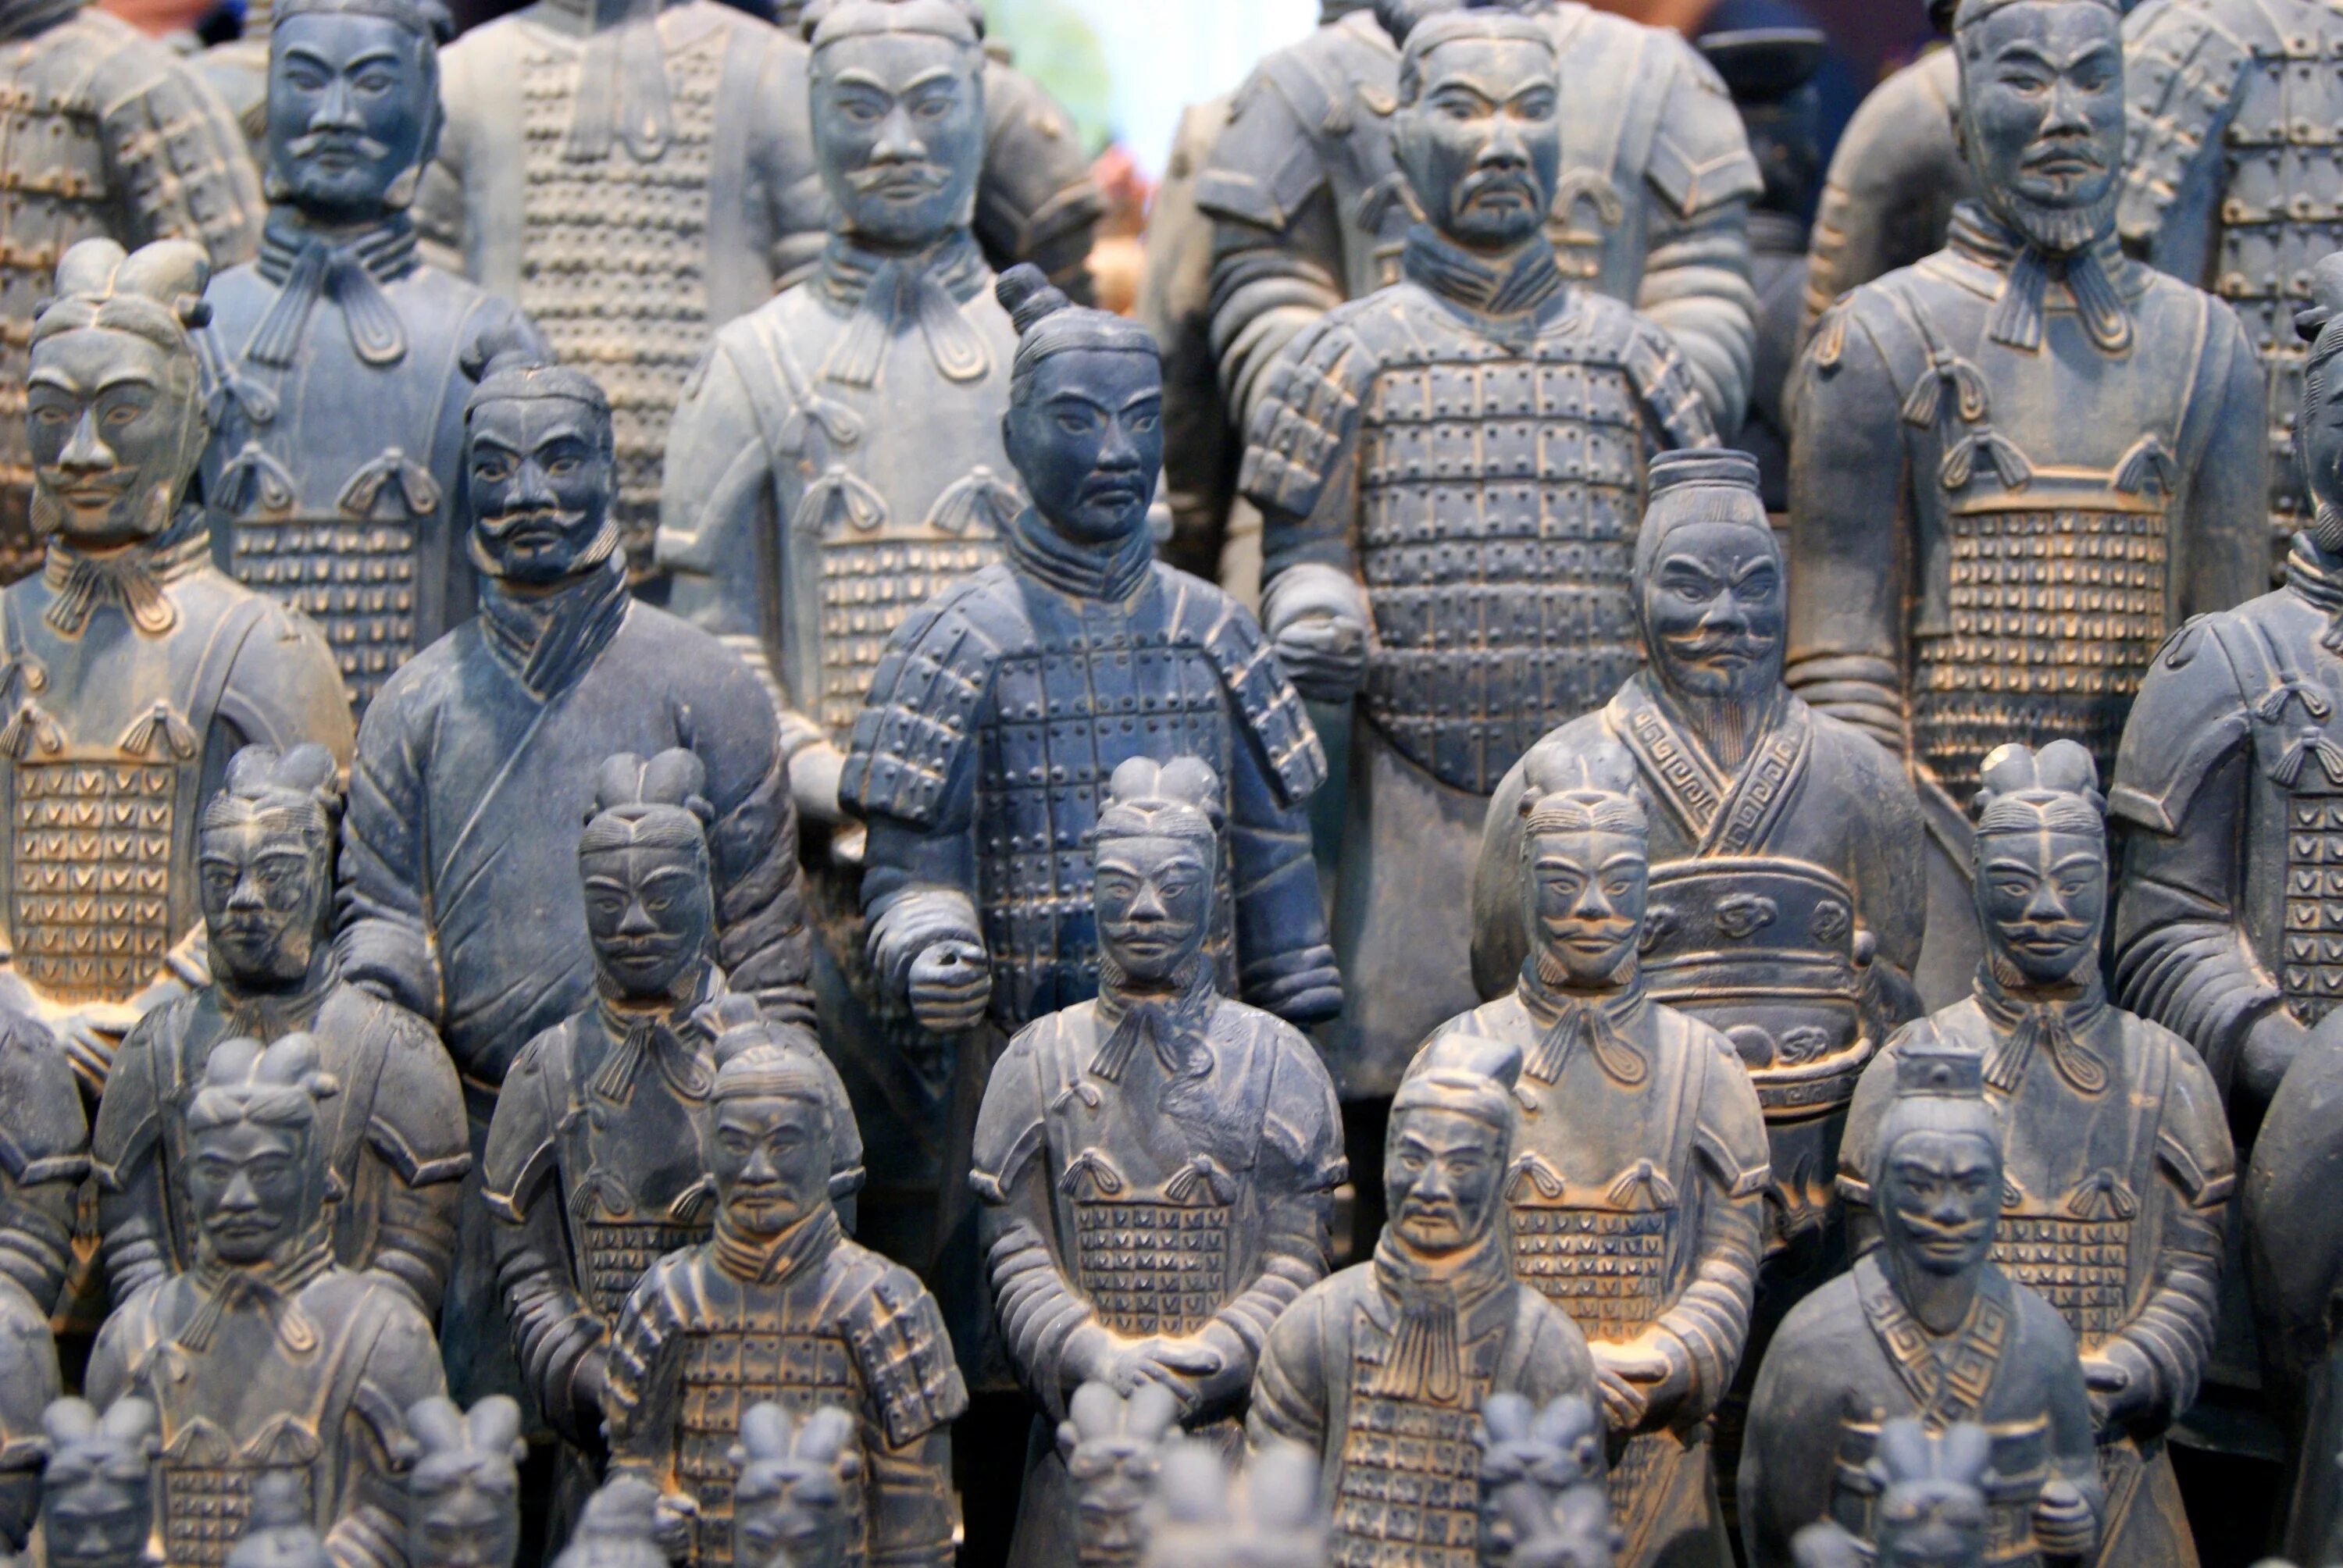 Терракотовая армия императора Цинь Шихуанди. Воин династии Цинь. Древнекитайские воины, терракотовая армия Цинь Шихуанди. Древний Китай терракотовая армия.